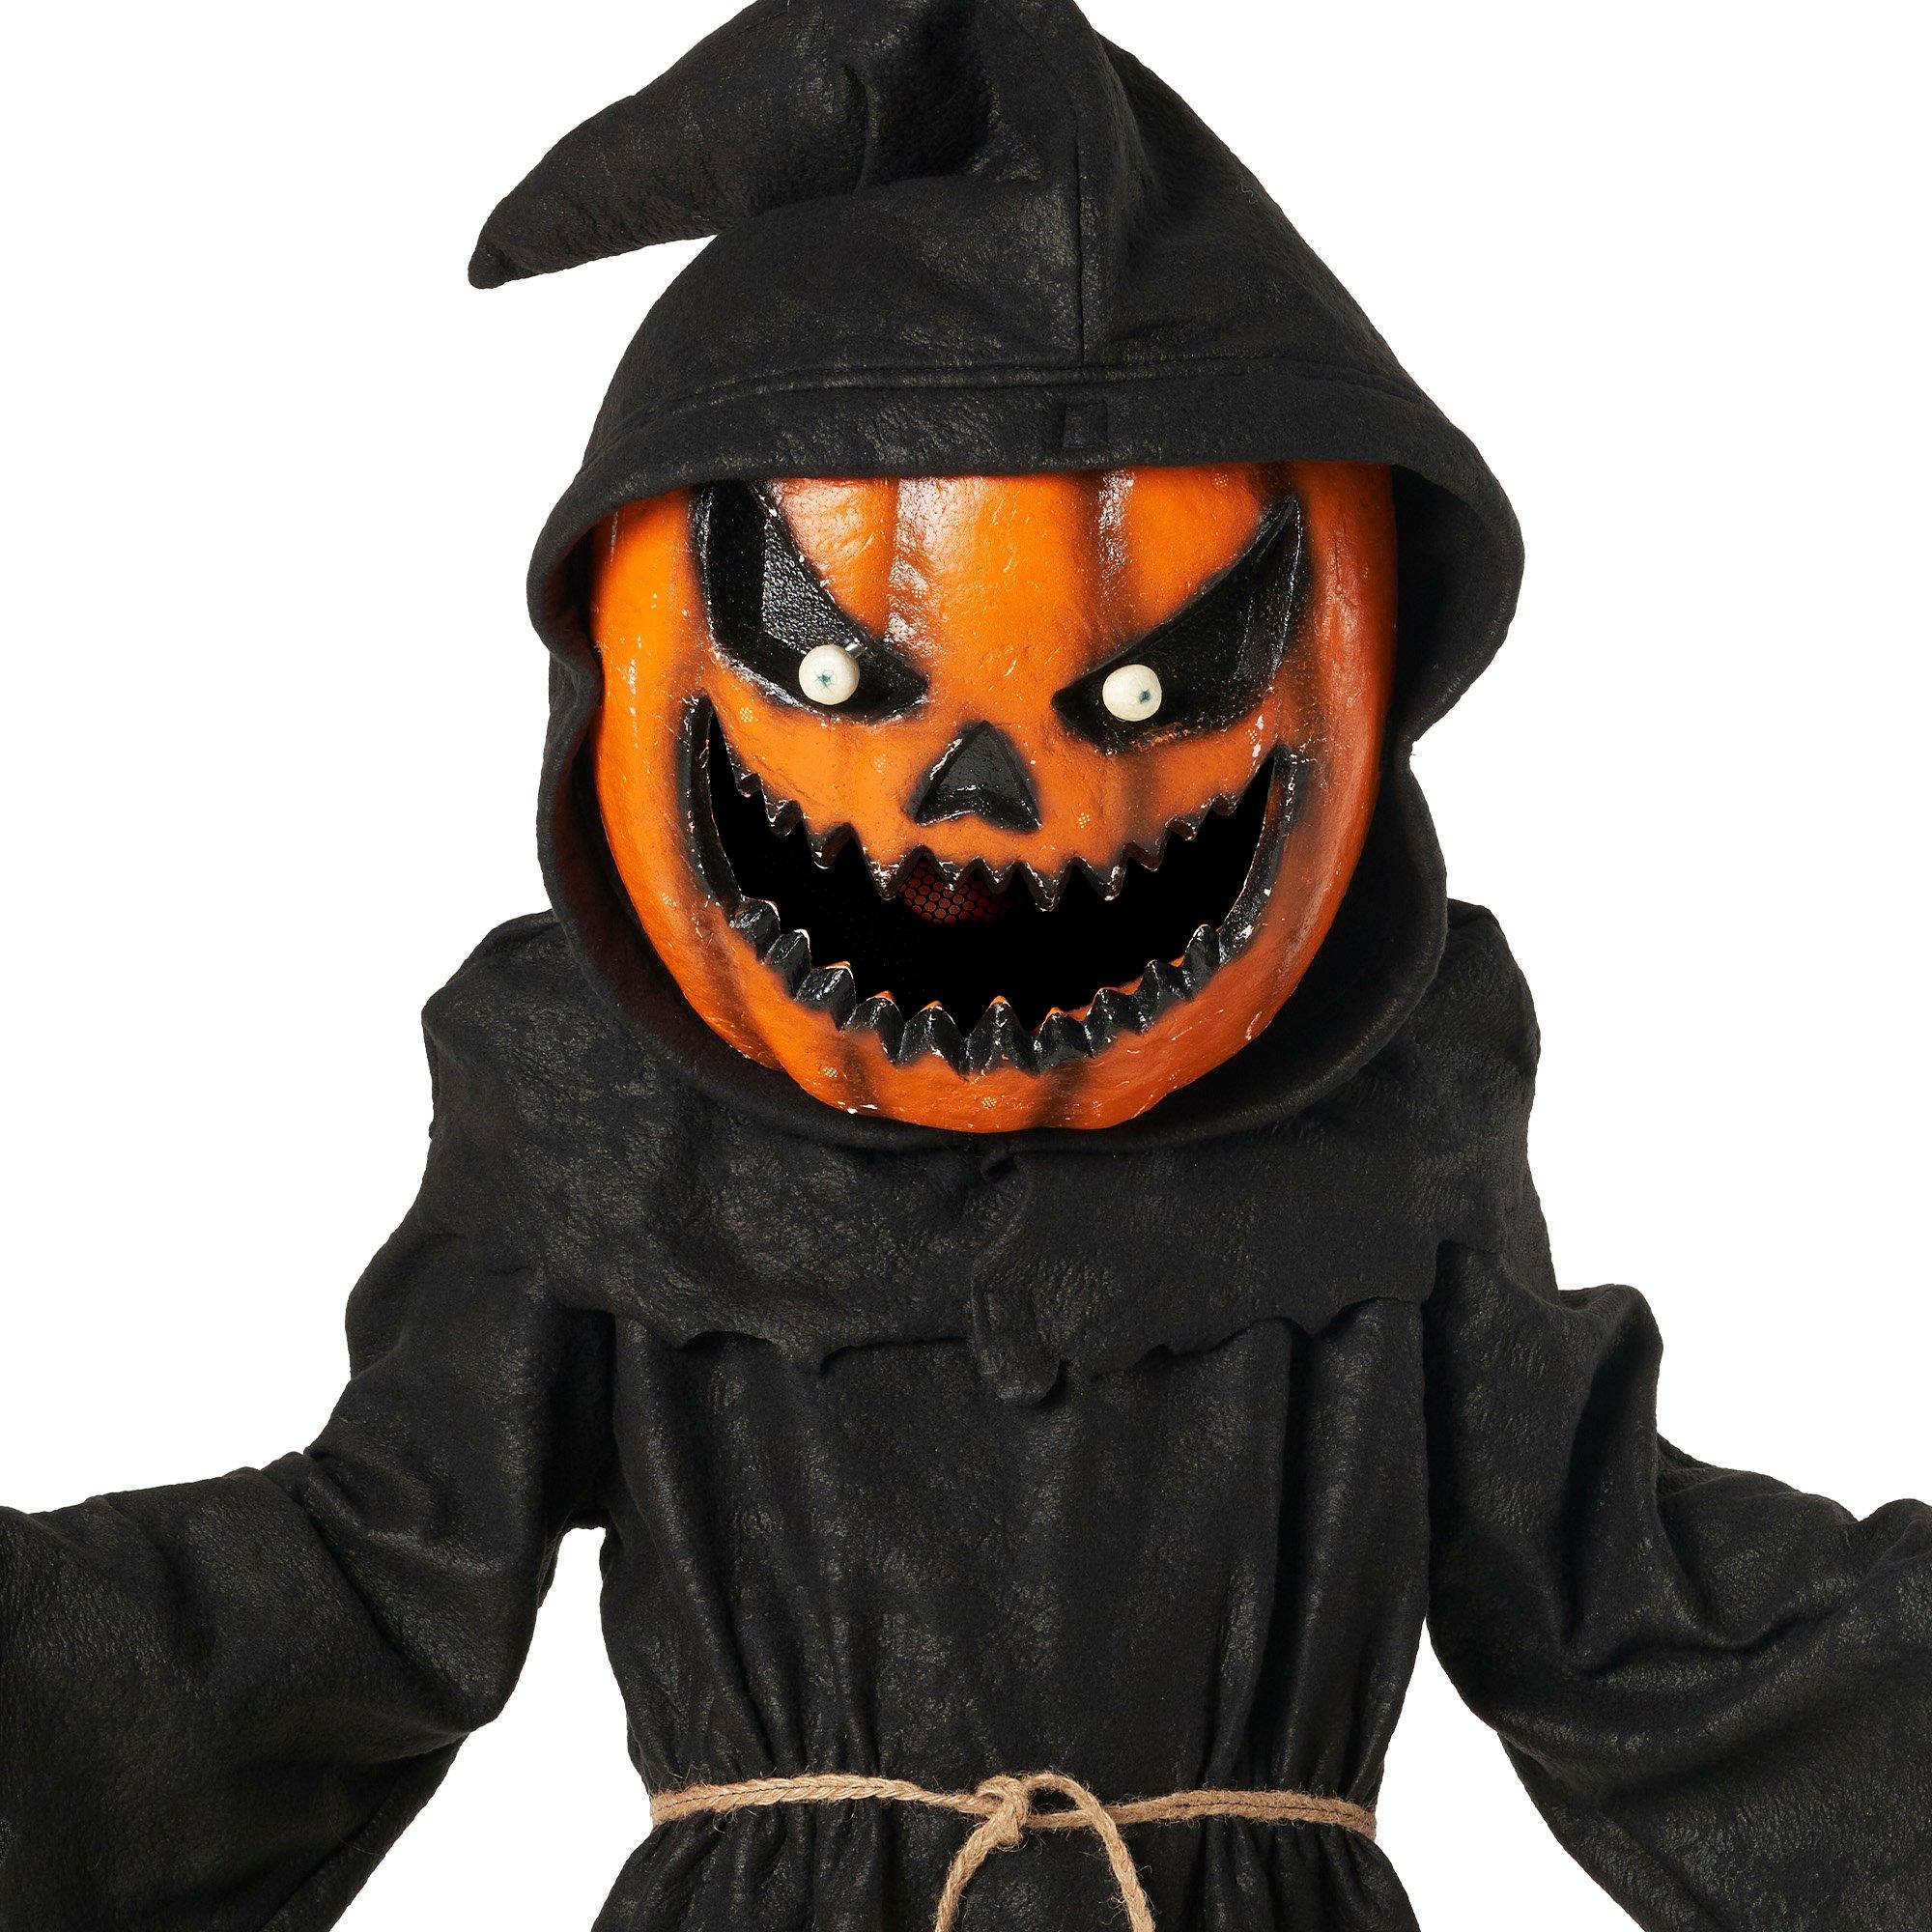 Kids' Evil Pumpkin Monster Costume